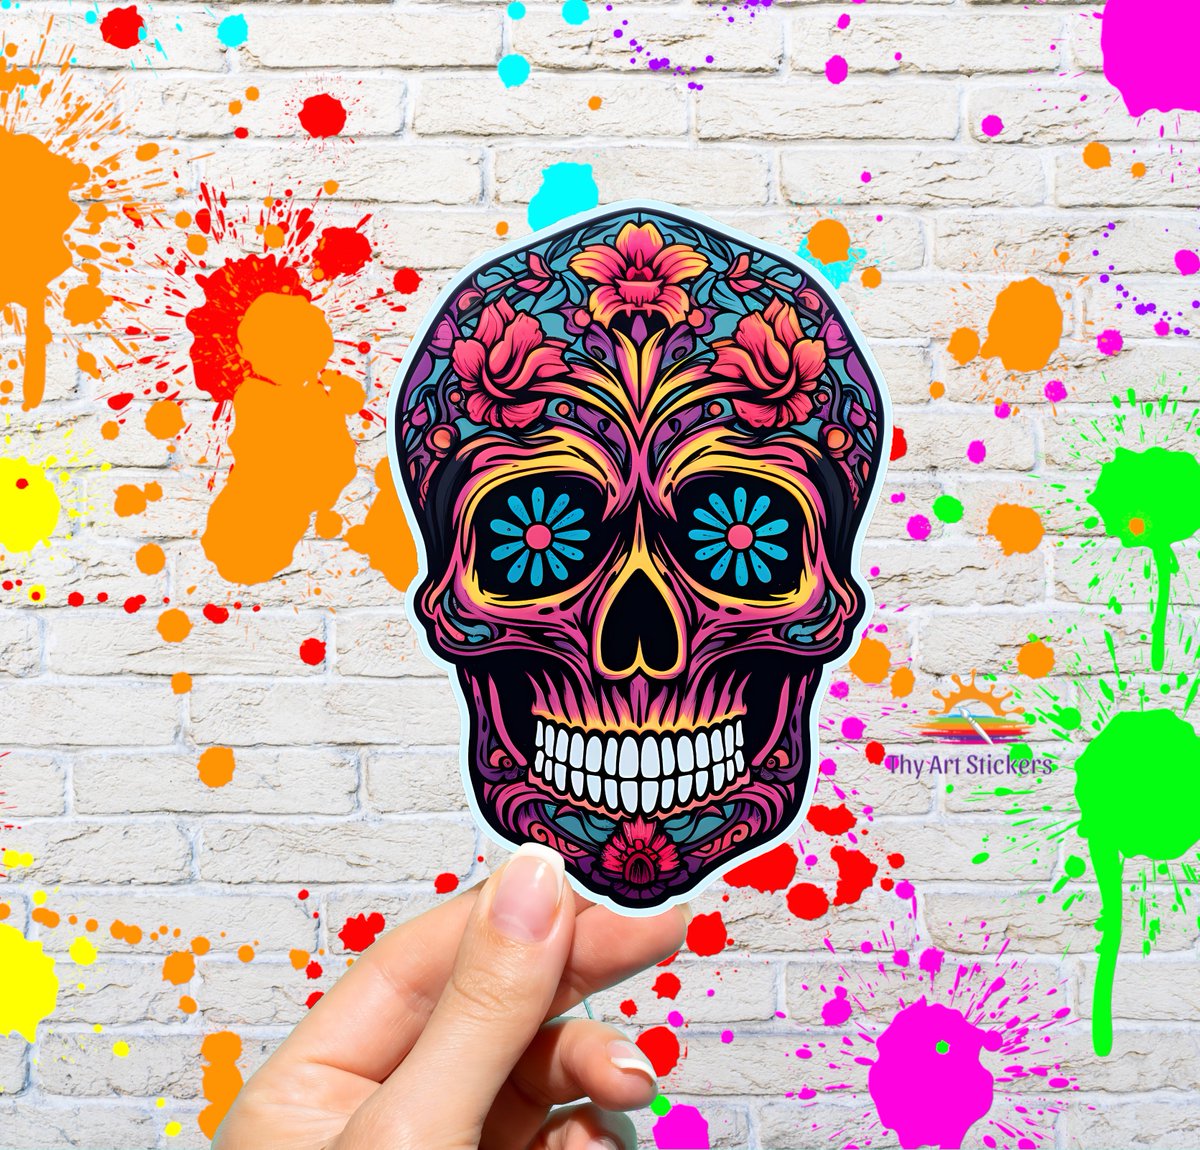 Excited to share the latest addition to my #etsy shop: Sugar Skull Sticker

etsy.me/463RntZ

#sugarskull #halloween #skullsticker #skull